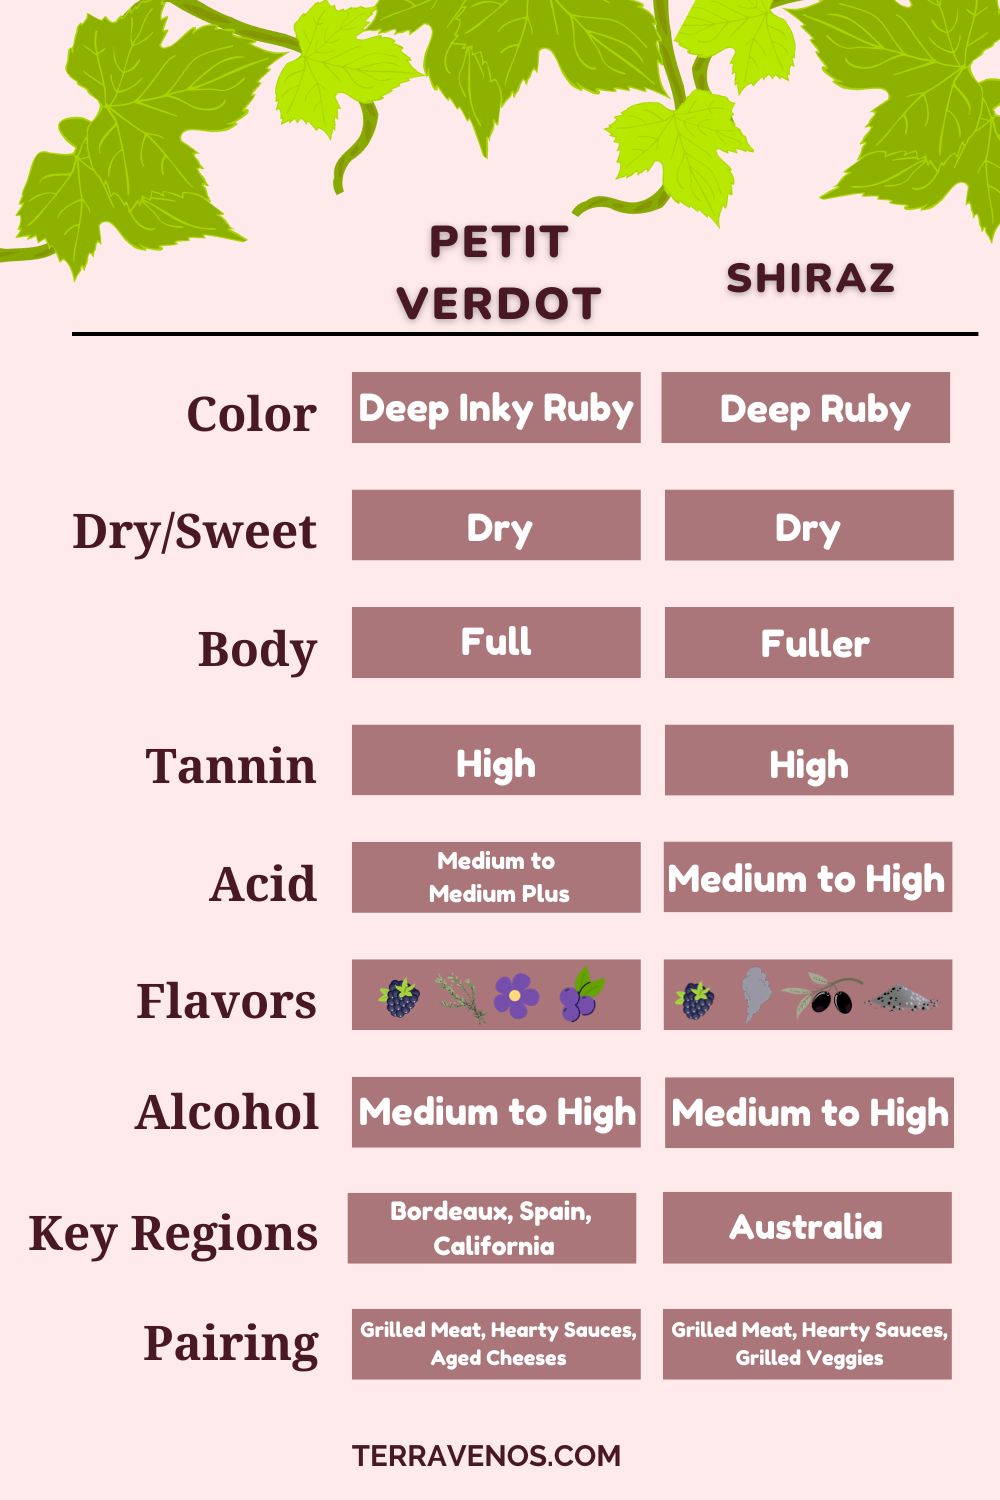 petit verdot vs shiraz wine comparison infographic